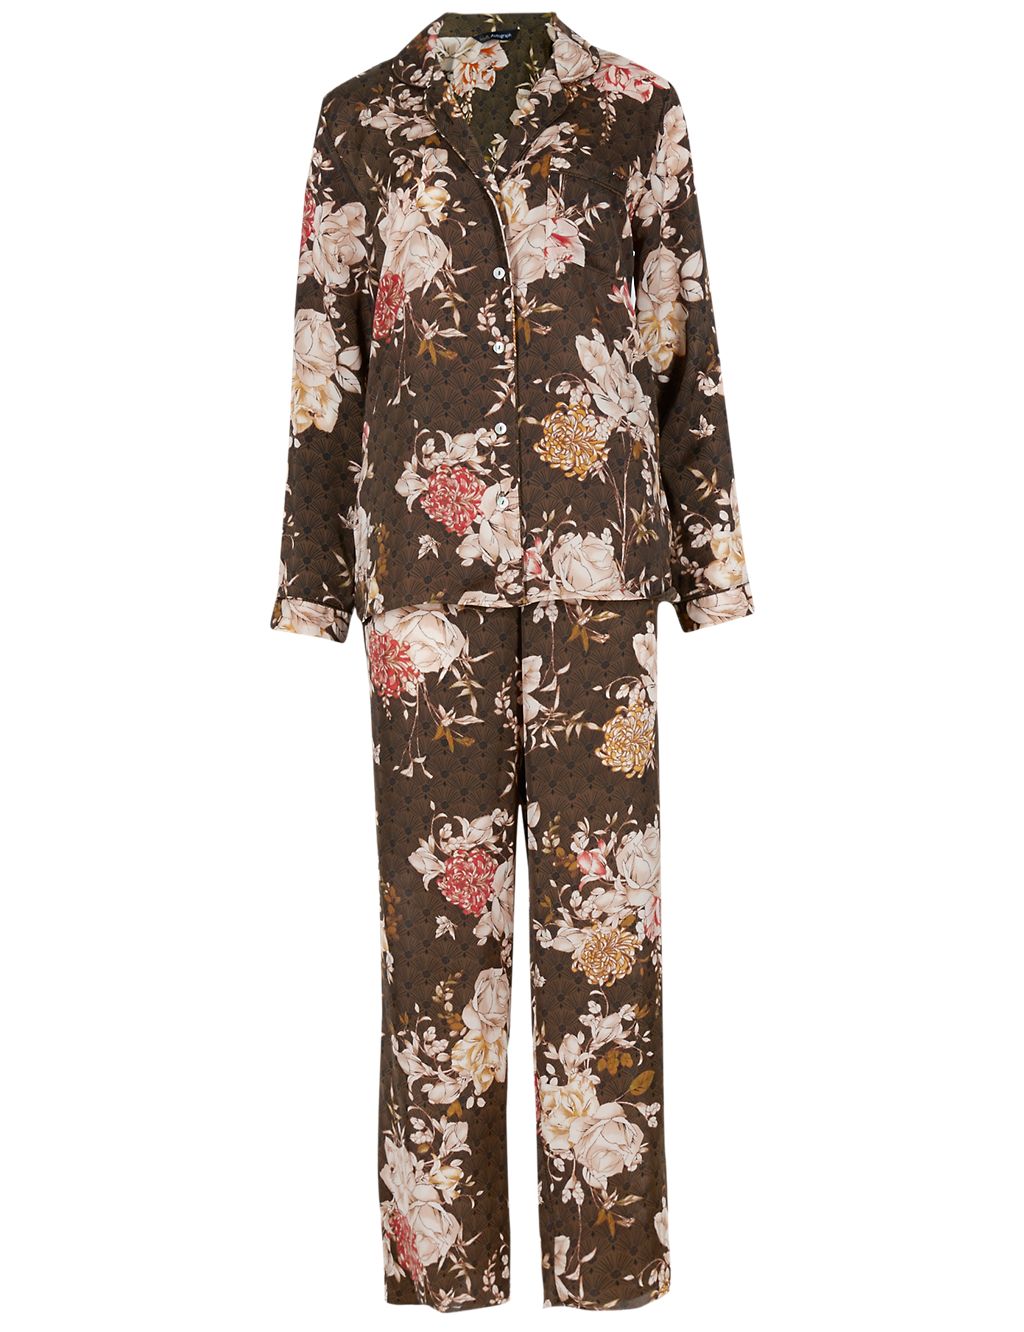 Satin Floral Print Revere Collar Pyjamas | Rosie for Autograph | M&S